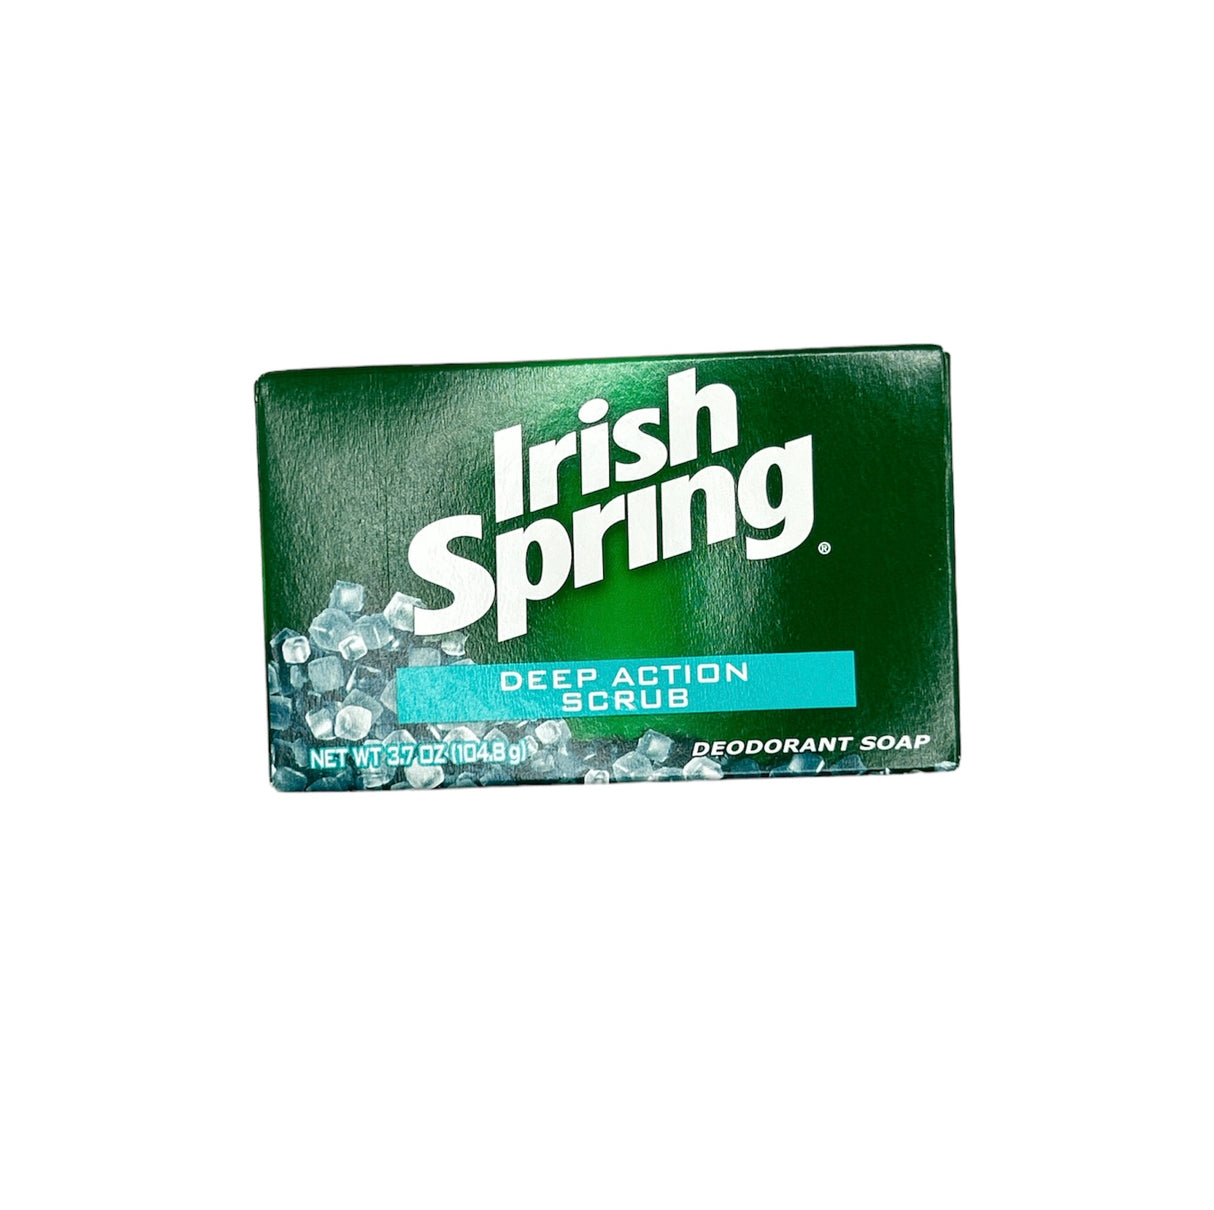 IRISH SPRING Deodorant Soap 104.8g